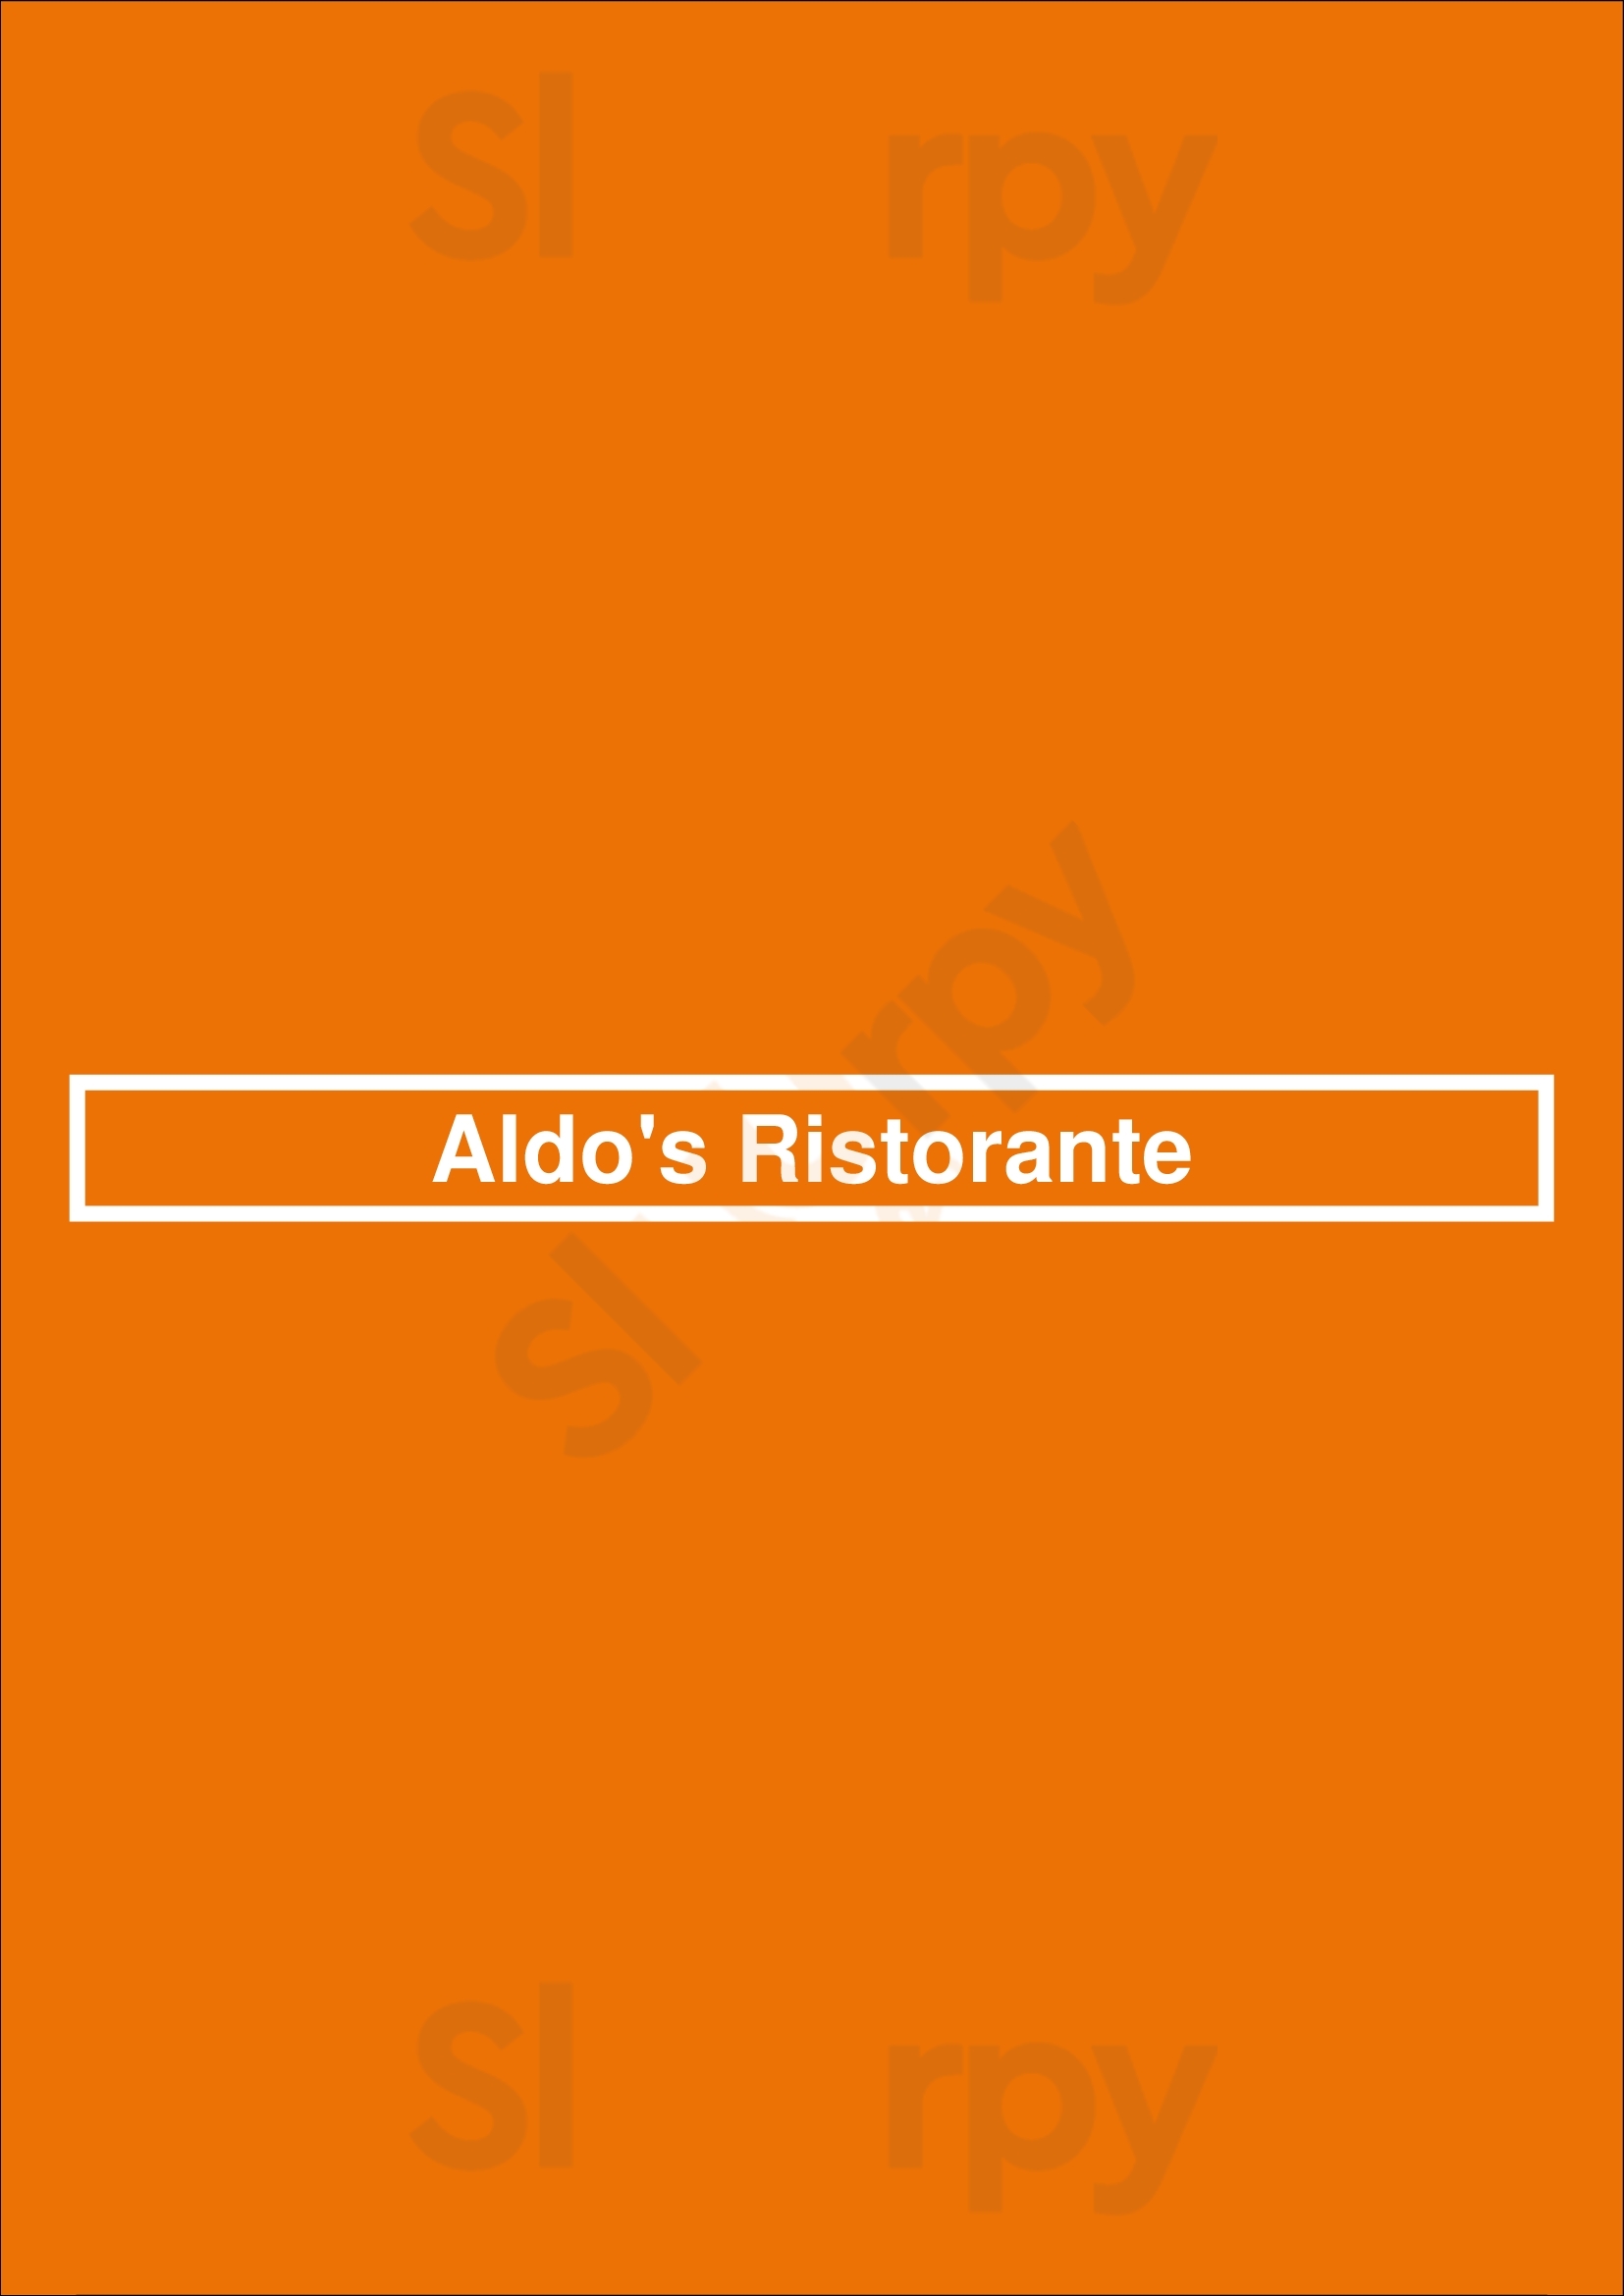 Aldo's Ristorante Virginia Beach Menu - 1